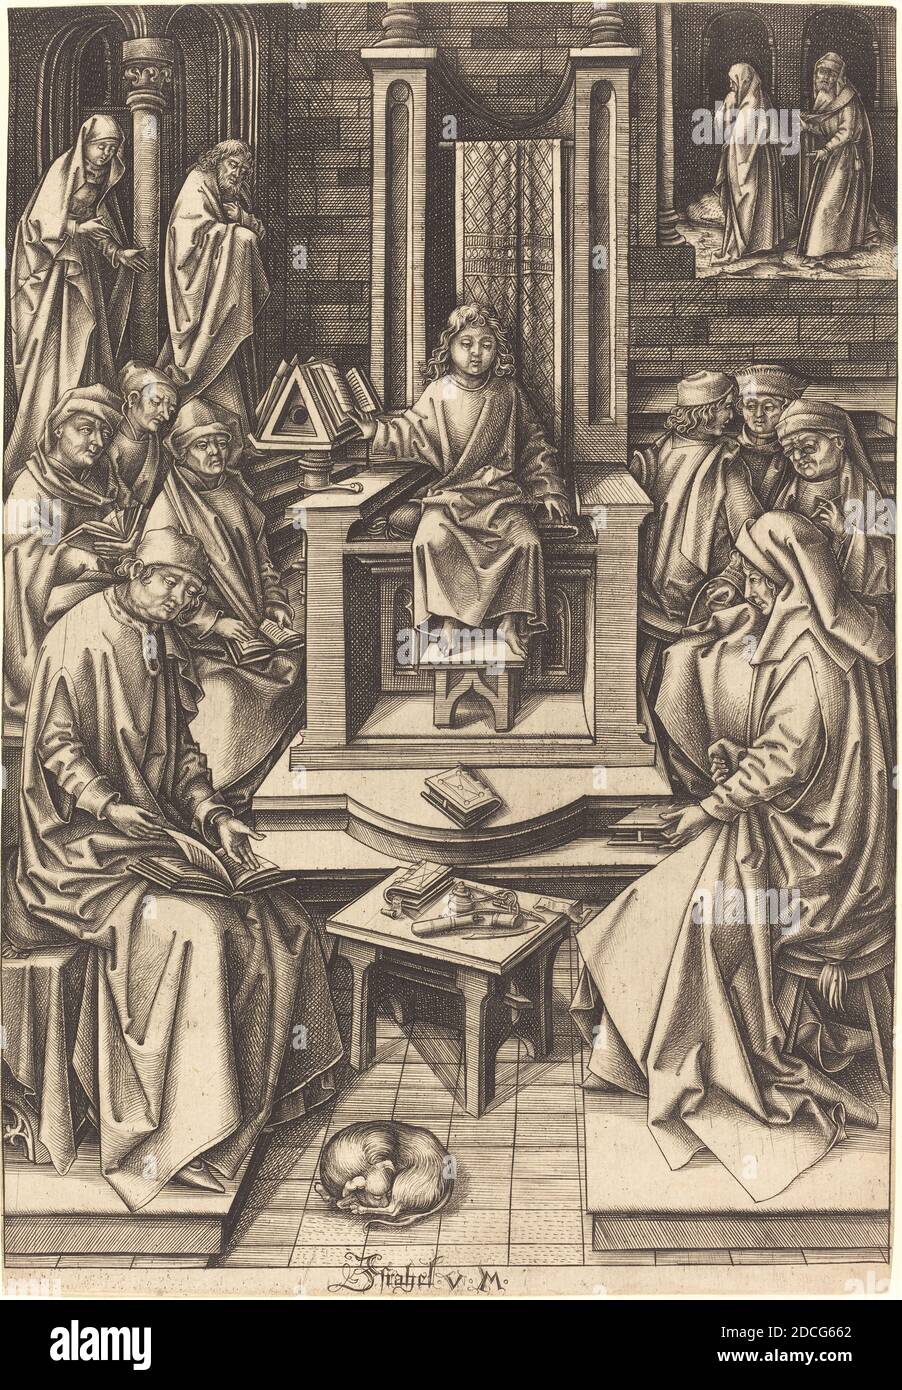 Israhel van Meckenem, (artist), German, c. 1445 - 1503, Hans Holbein the Elder, (artist after), German, c. 1465 - 1524, Christ Among the Doctors, The Life of the Virgin, (series), c. 1490/1500, engraving Stock Photo